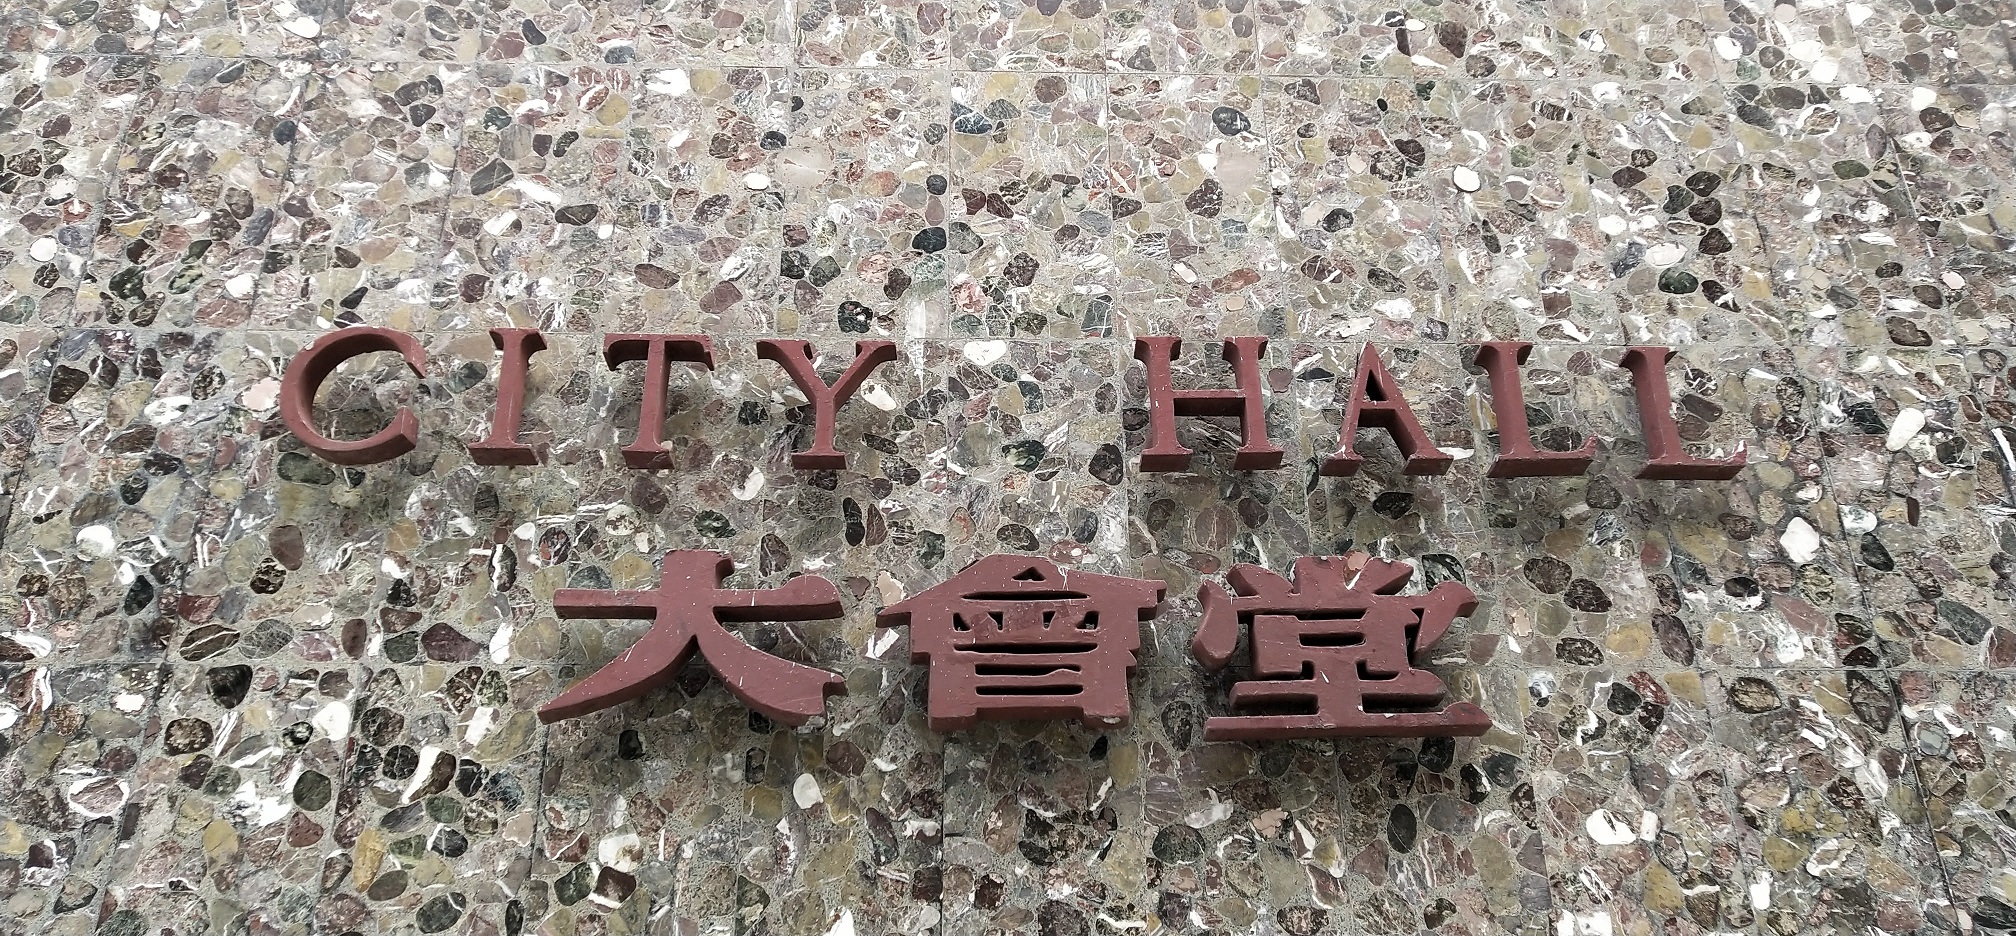 Hong Kong City Hall name sign